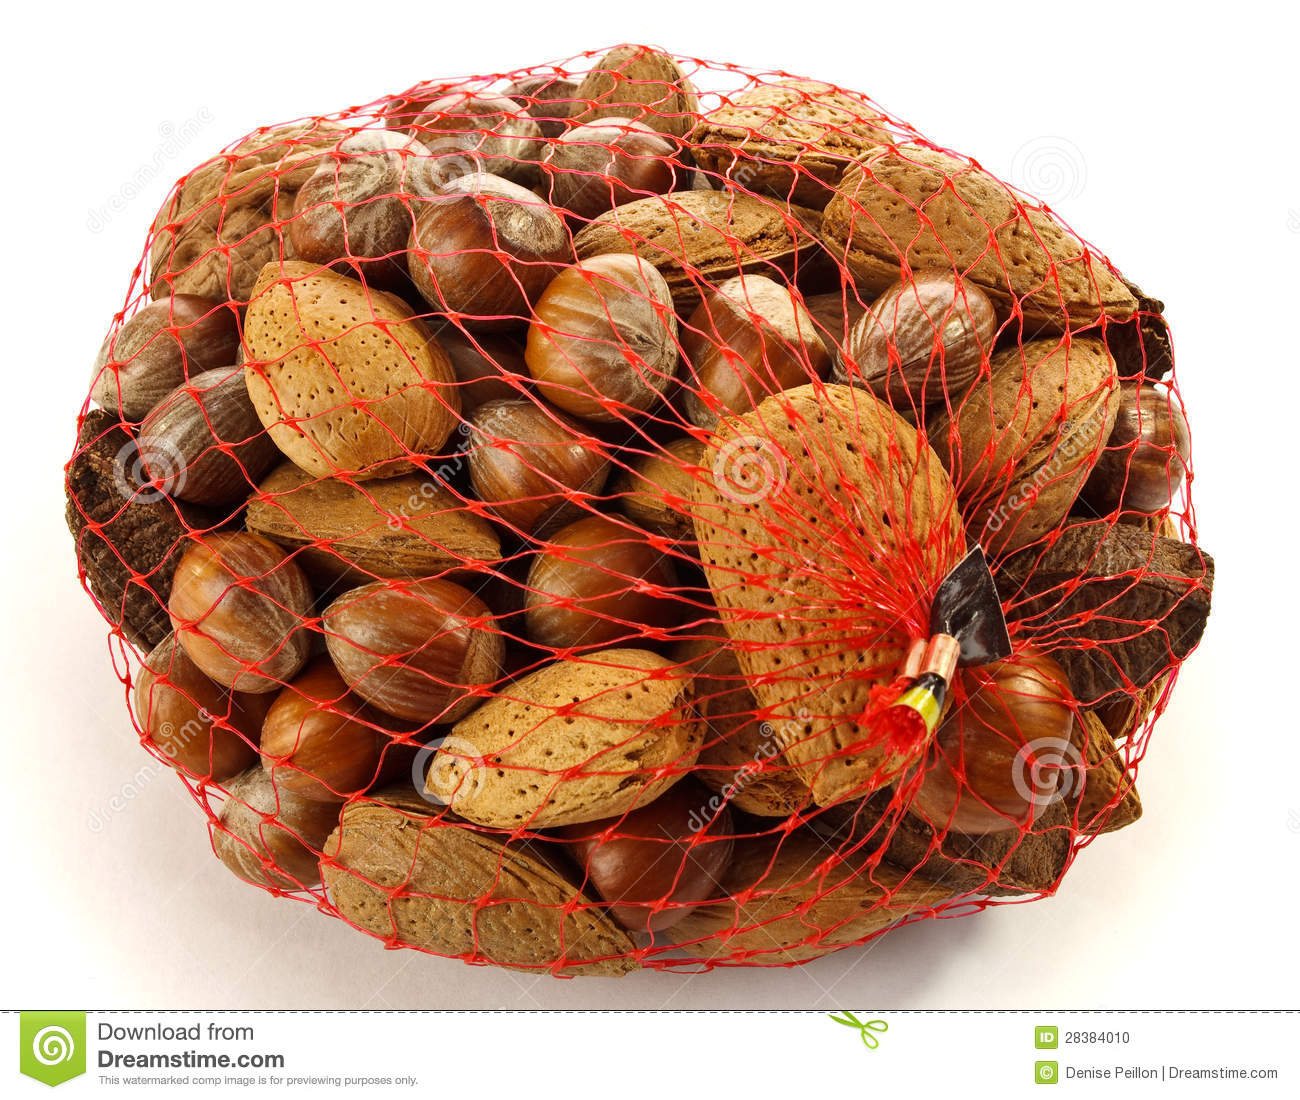 Mixed Nuts Stock Photo   Image  28384010